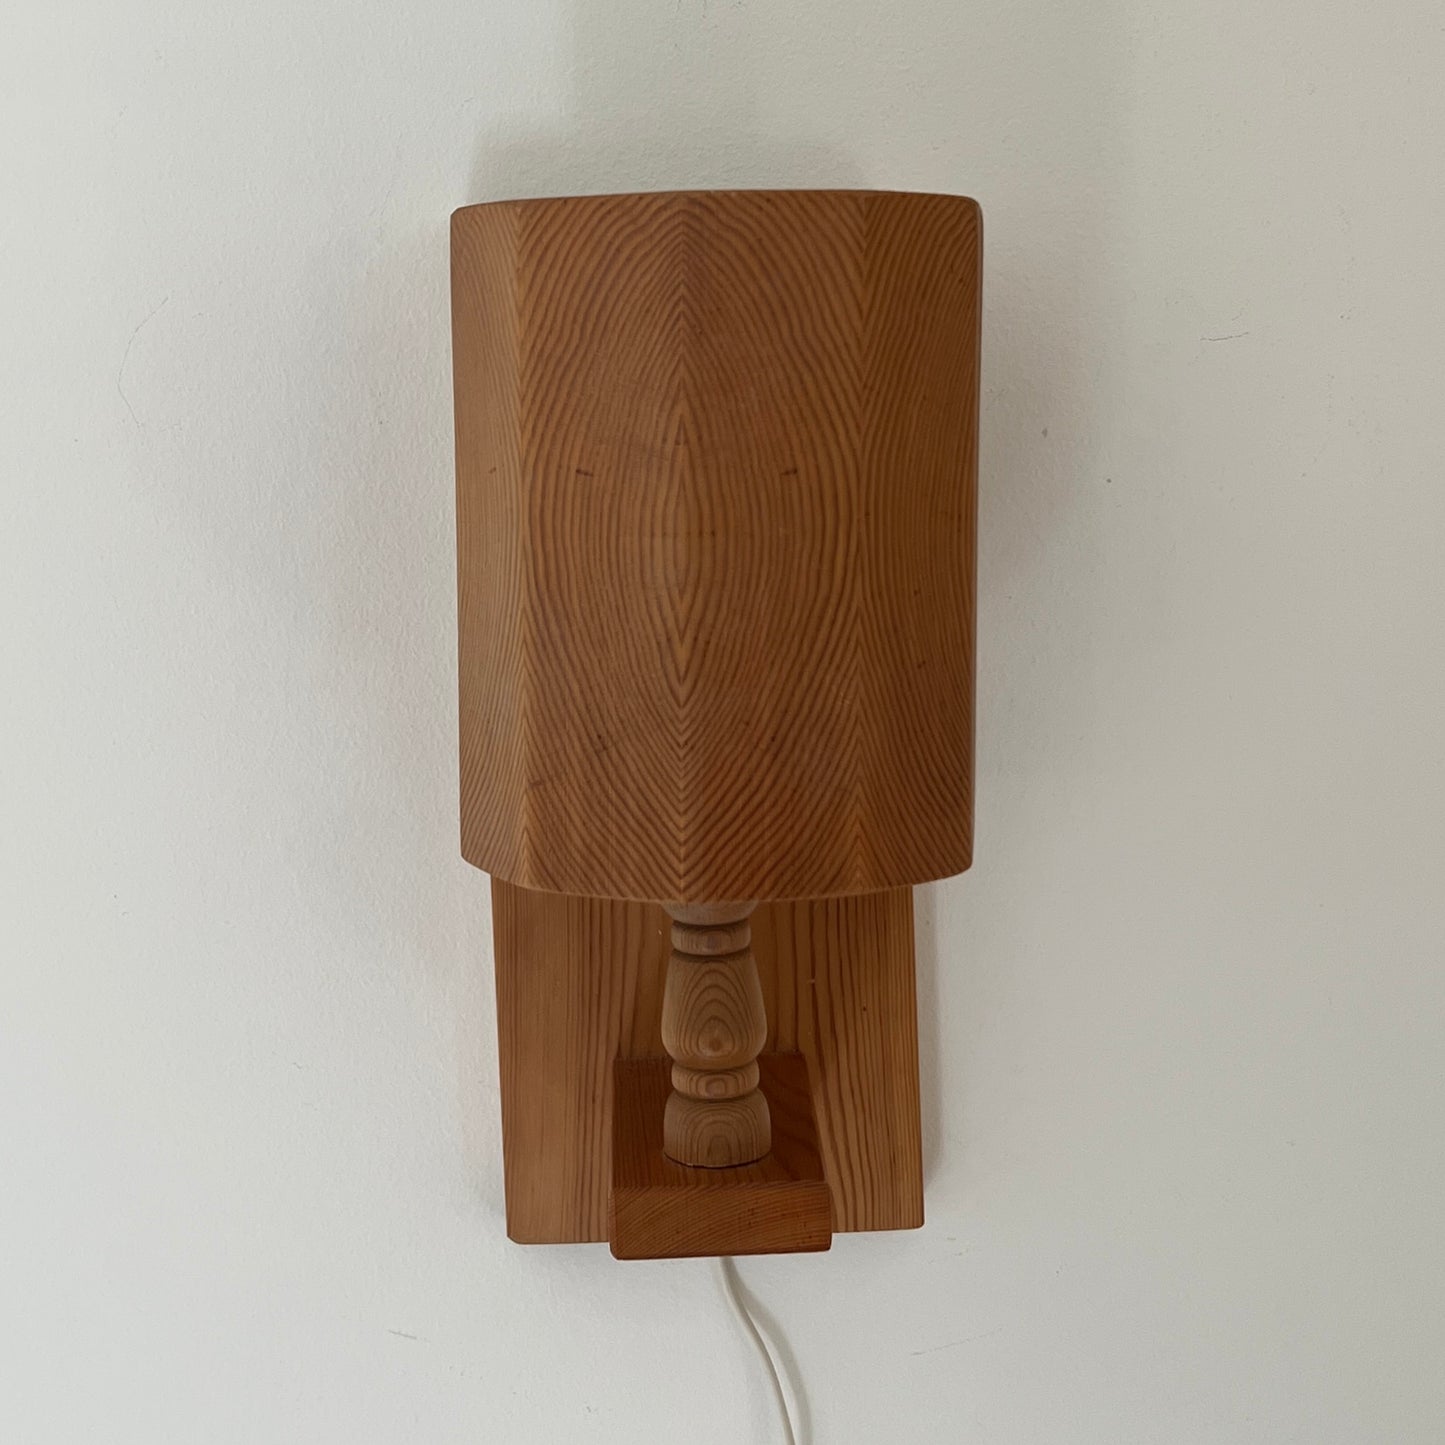 1960s Swedish Wooden Wall Light